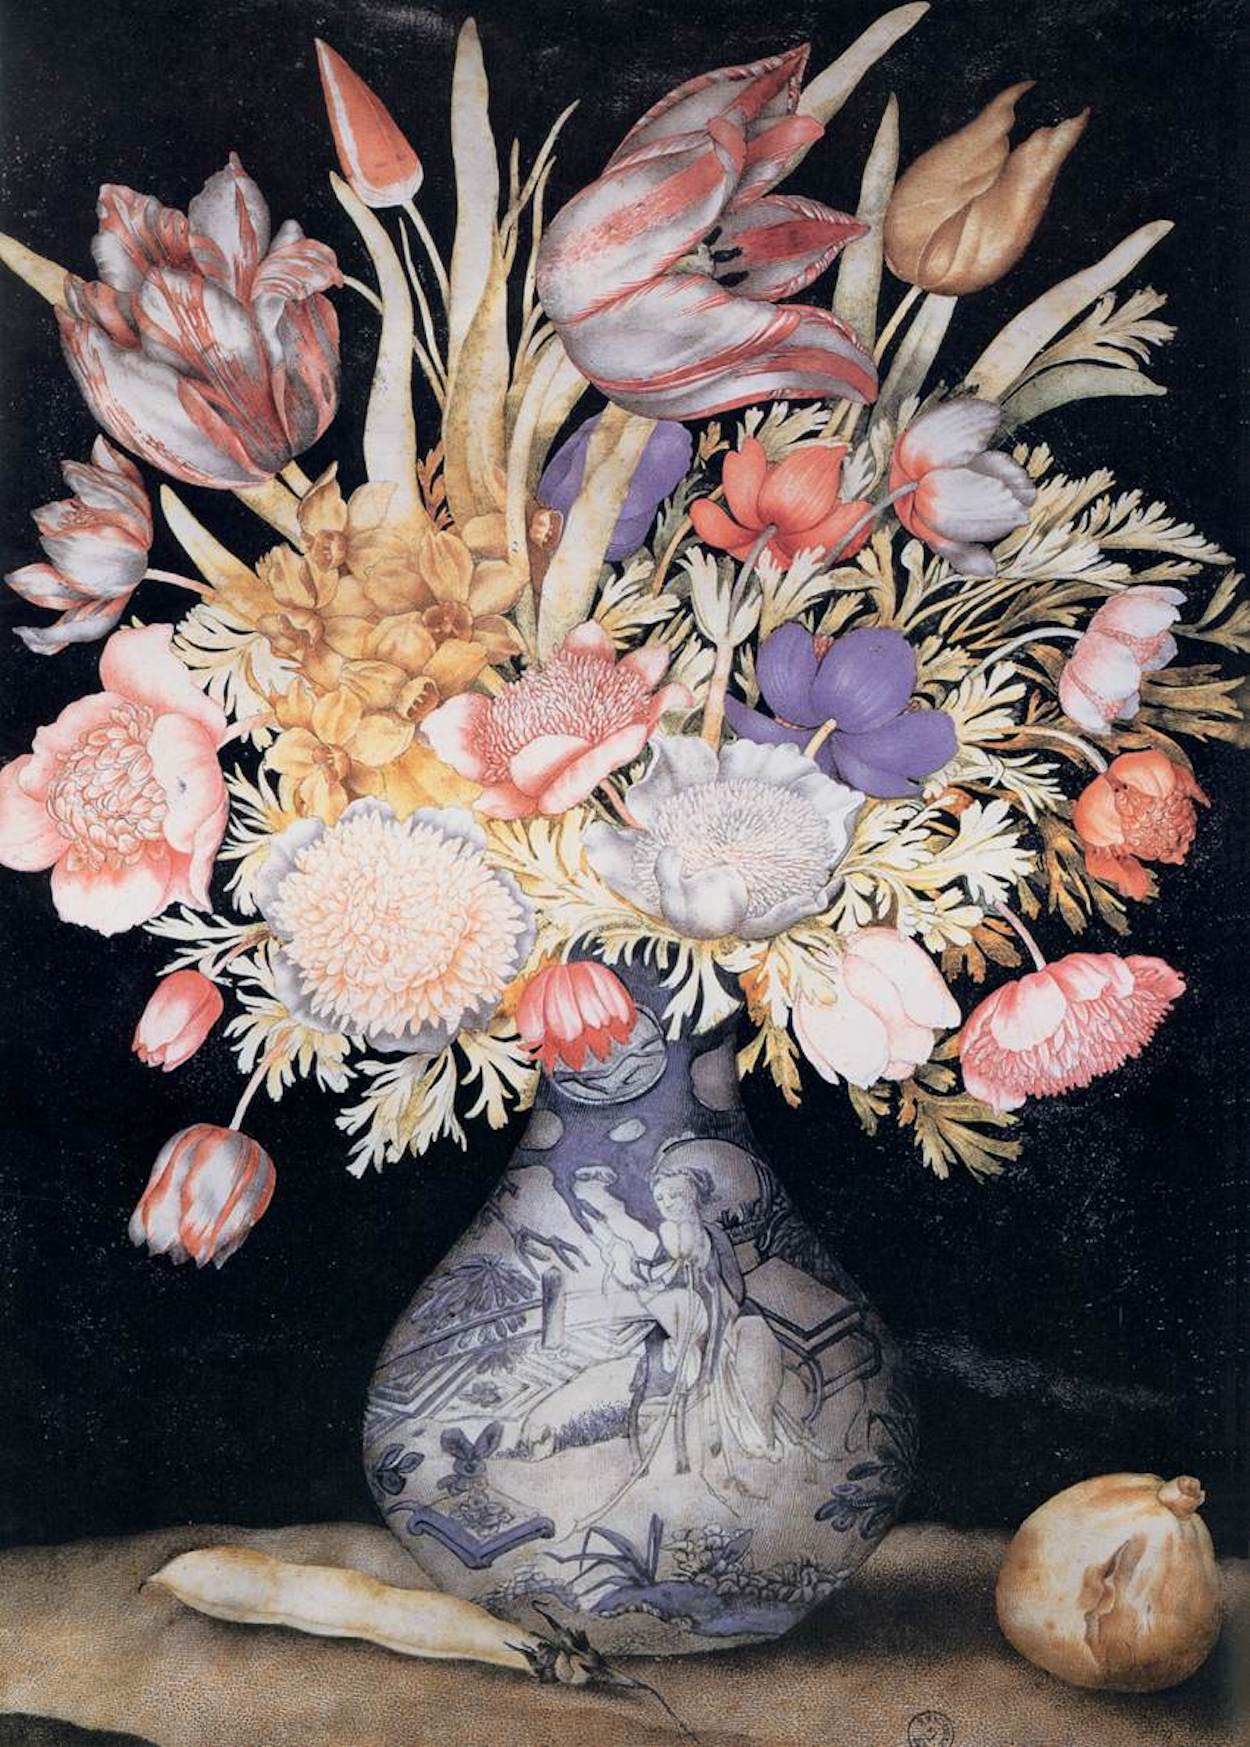 Vase chinois avec fleurs et fruits by Giovanna Garzoni - Vers 1641–1652 - 51 x 36.9 cm Galleria degli Uffizi